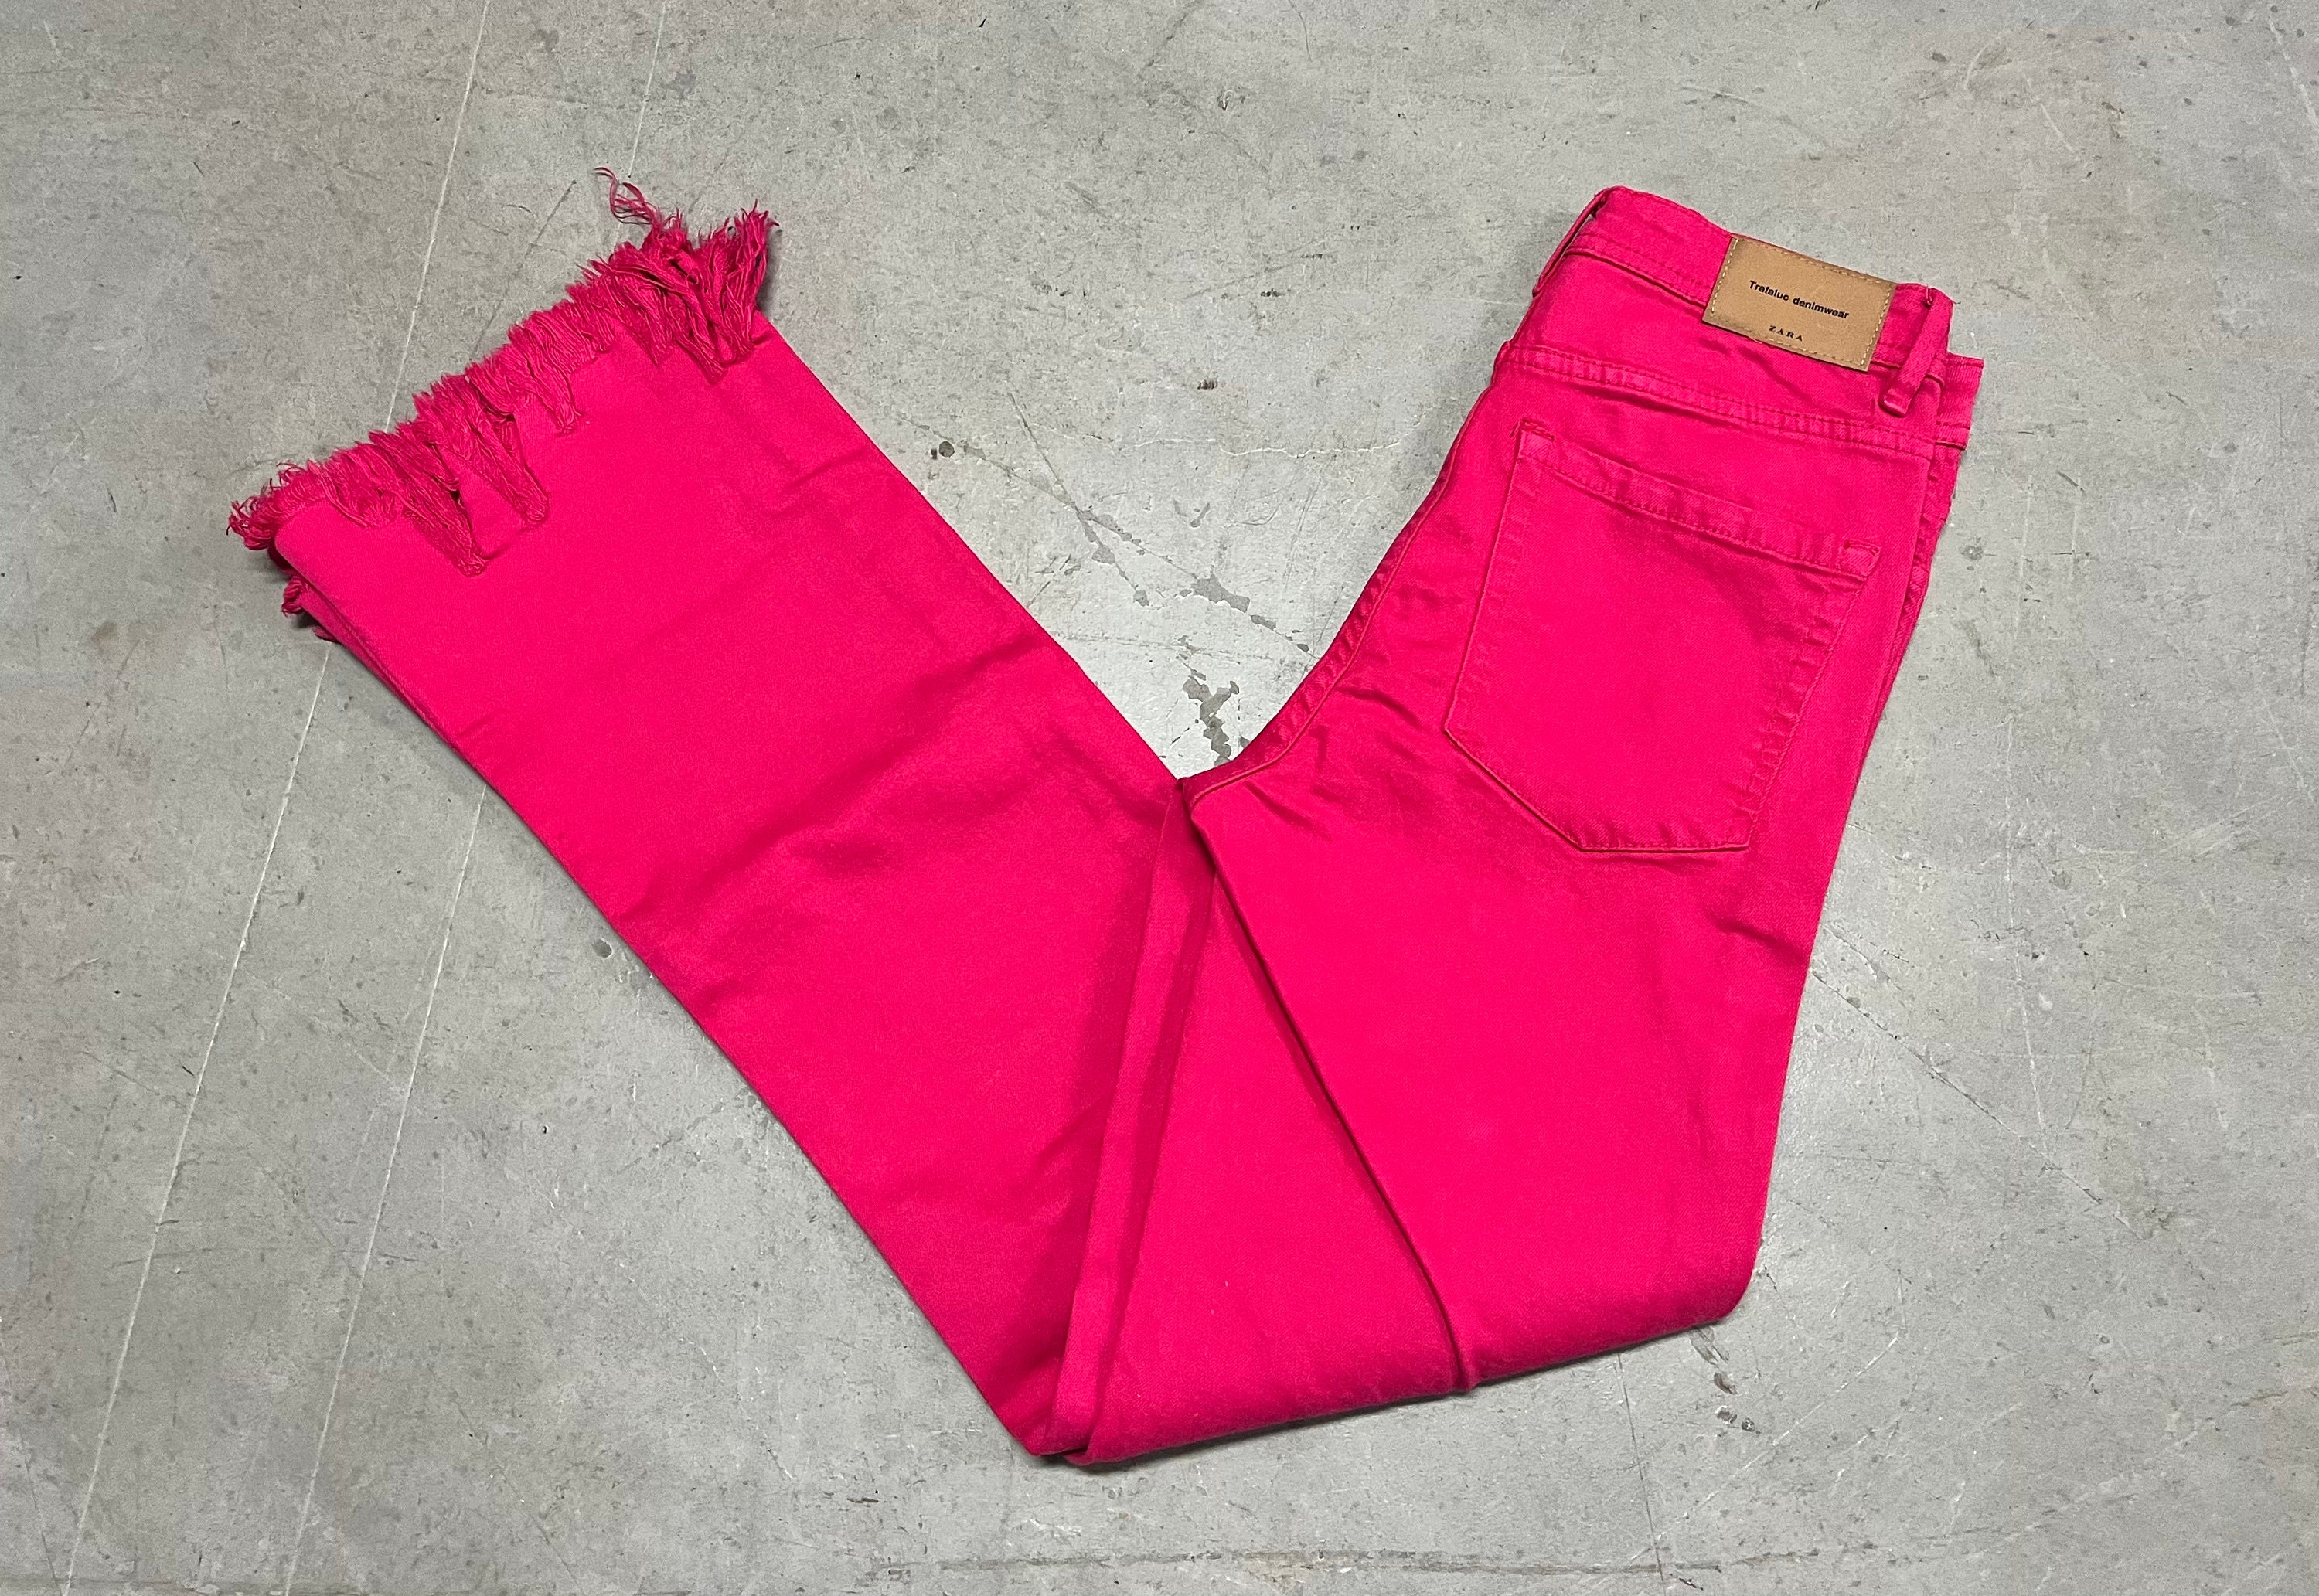 Zara Trafaluc Denimwear Hot Pink Fringed Flared Denim Jeans Women's Jeans  Size 2 - Etsy